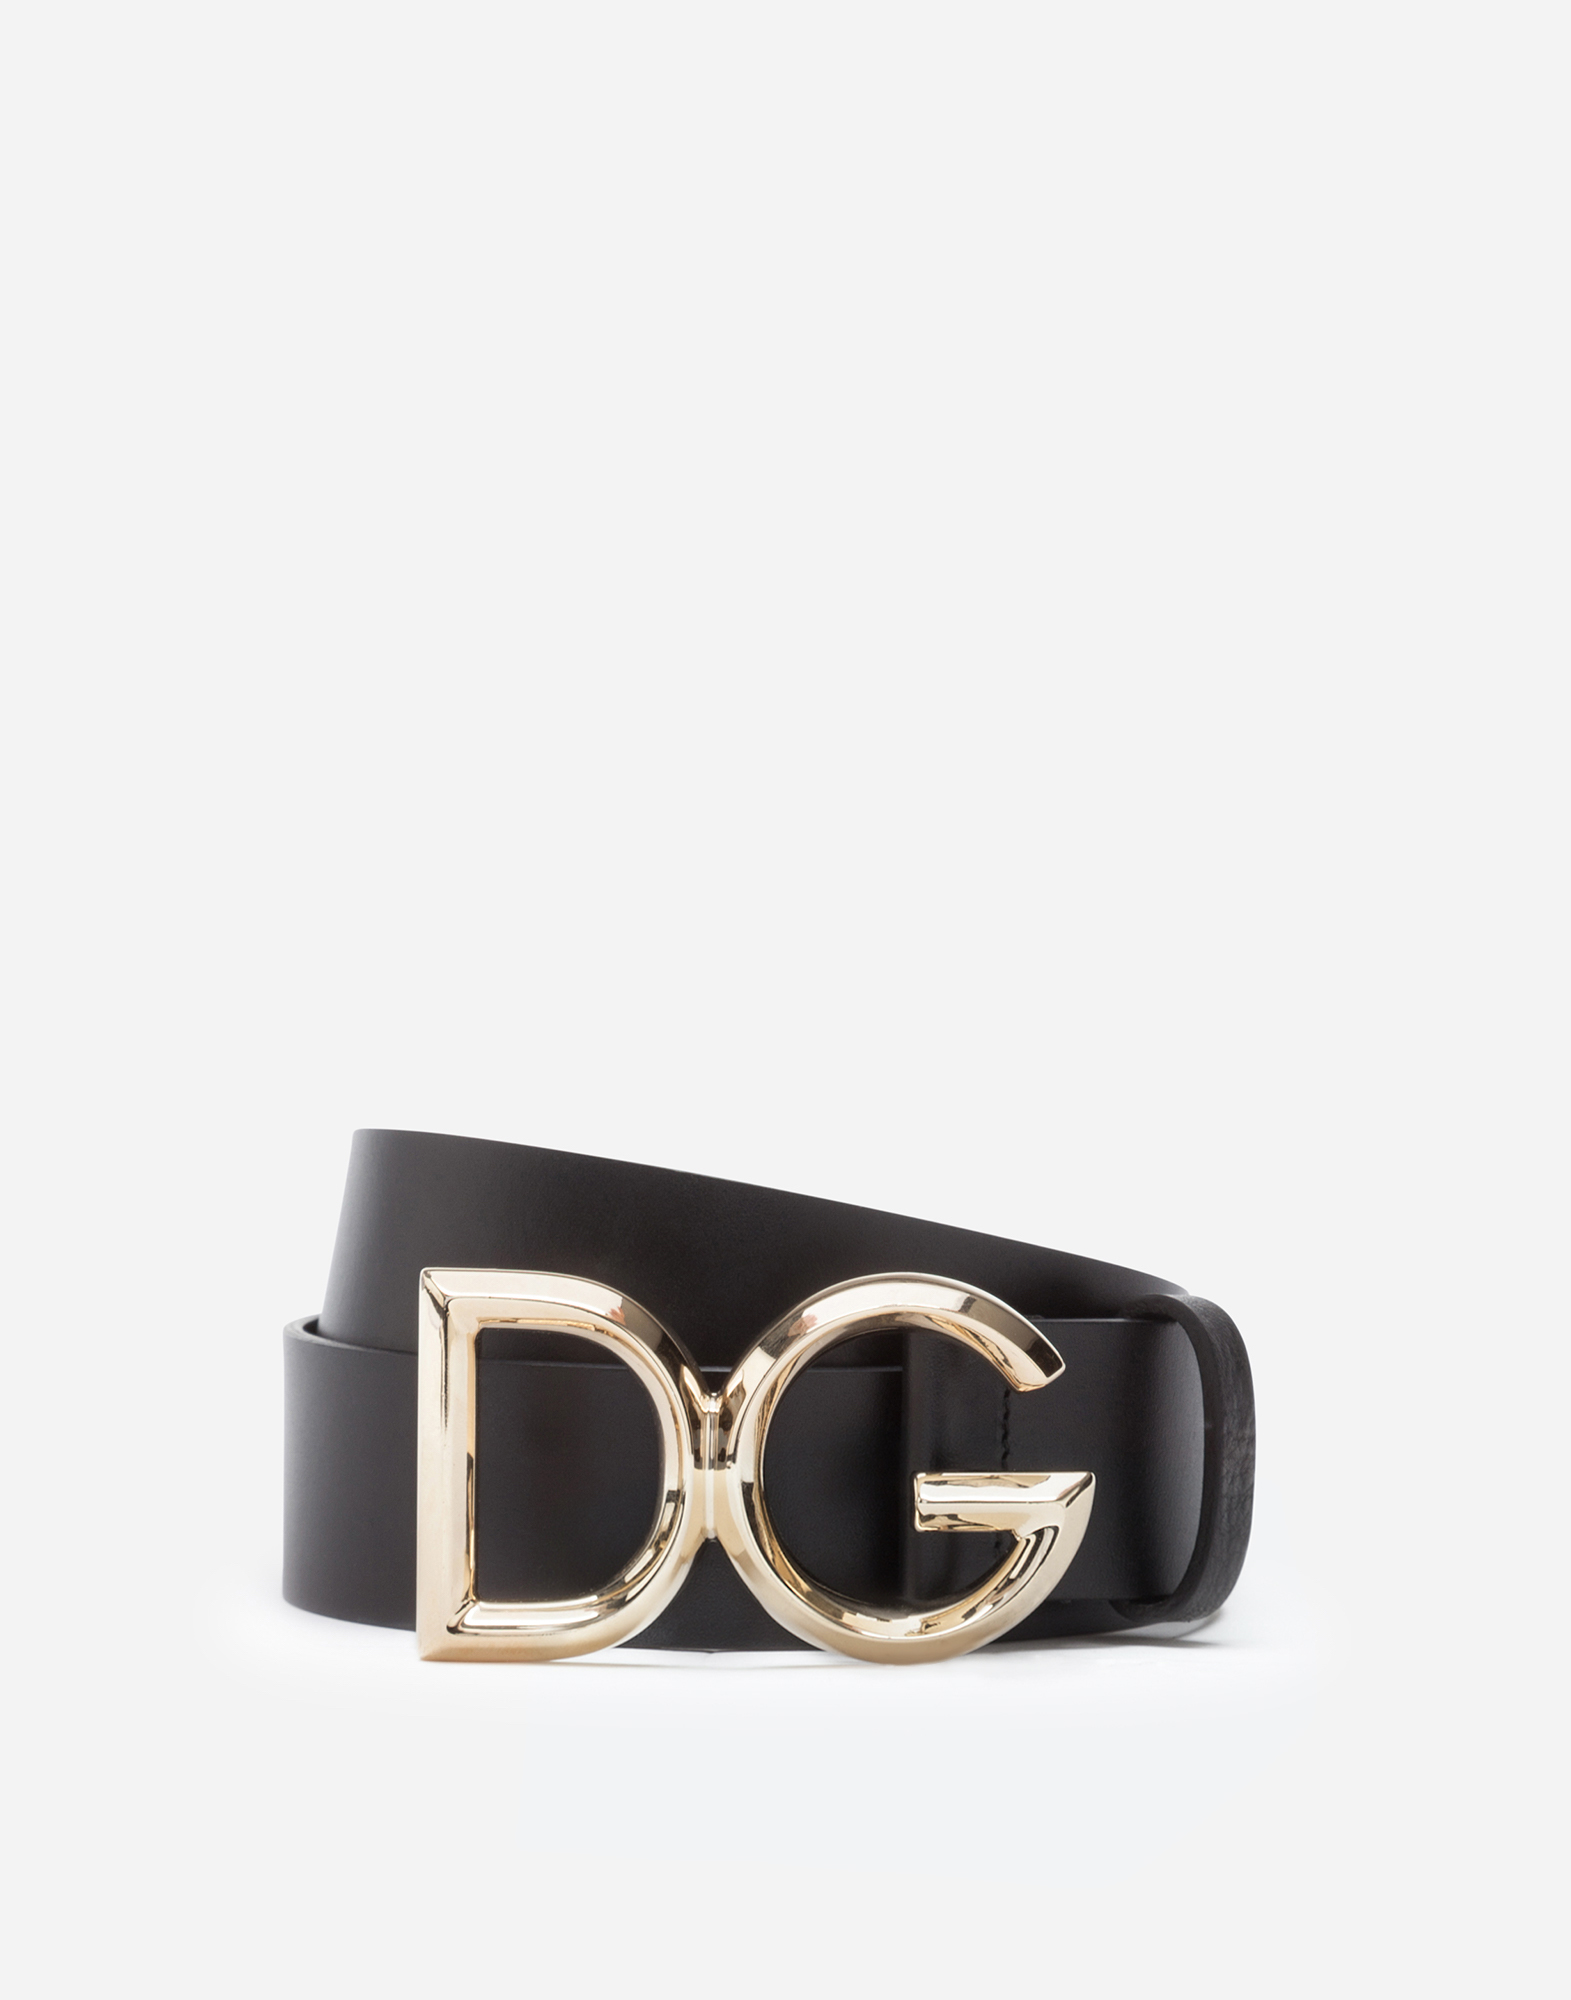 Luxury leather belt with DG logo in Black/Gold for Men | Dolce&Gabbana®